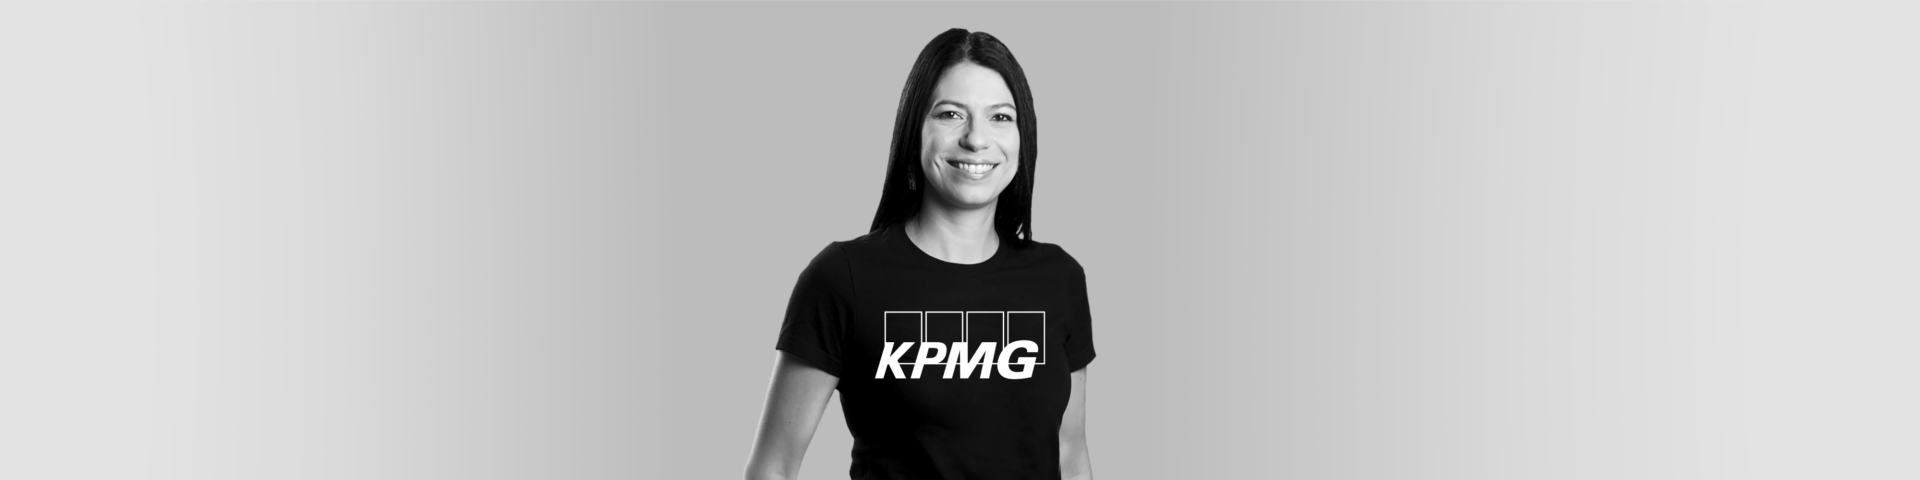 KPMG Global Tech Innovator 